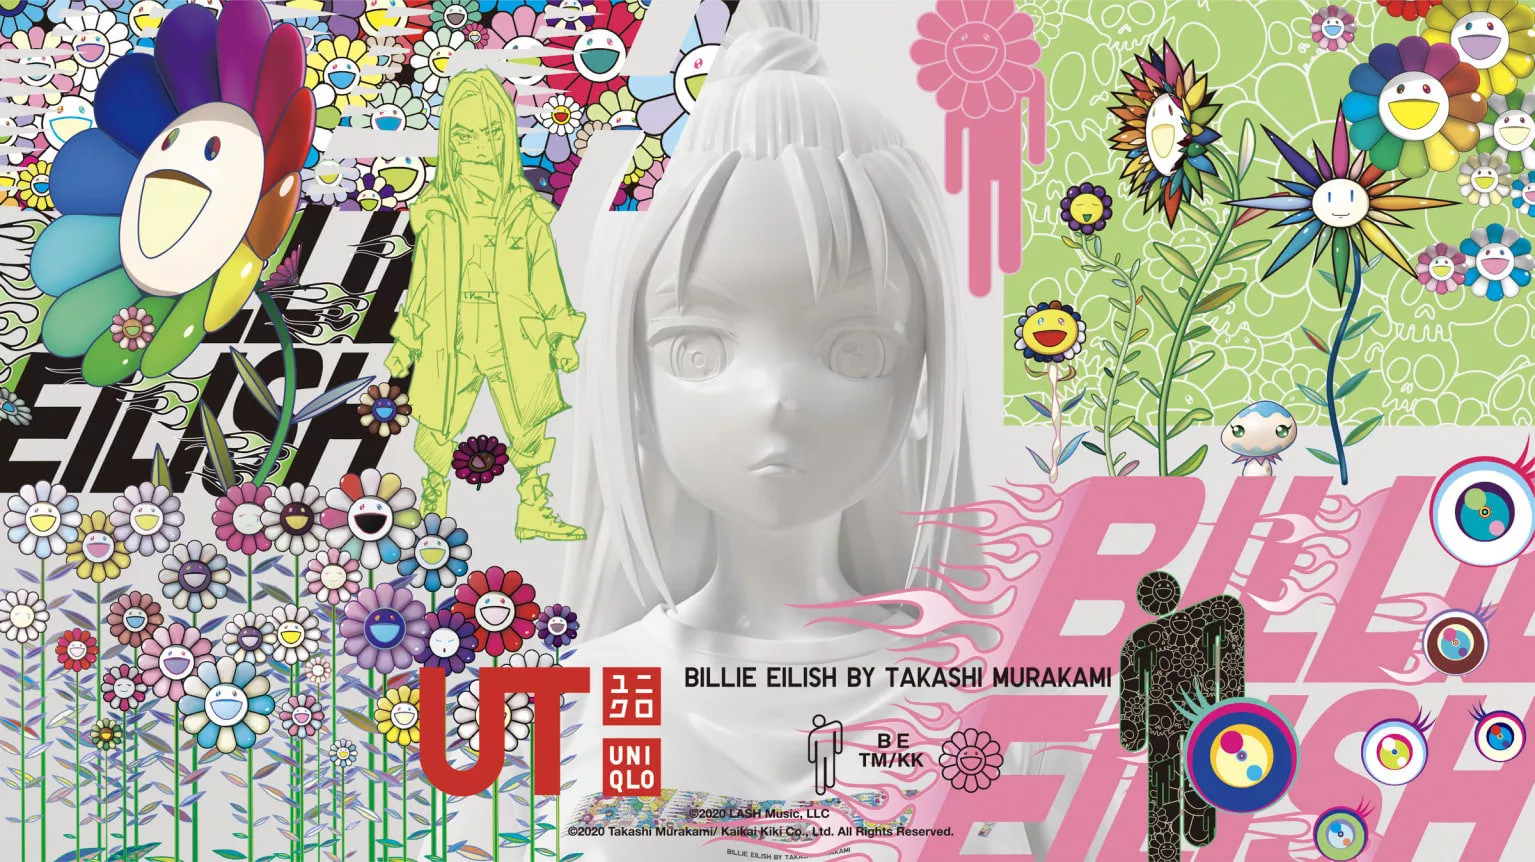 Uniqlo reopens with Billie Eilish-Takashi Murakami collaboration